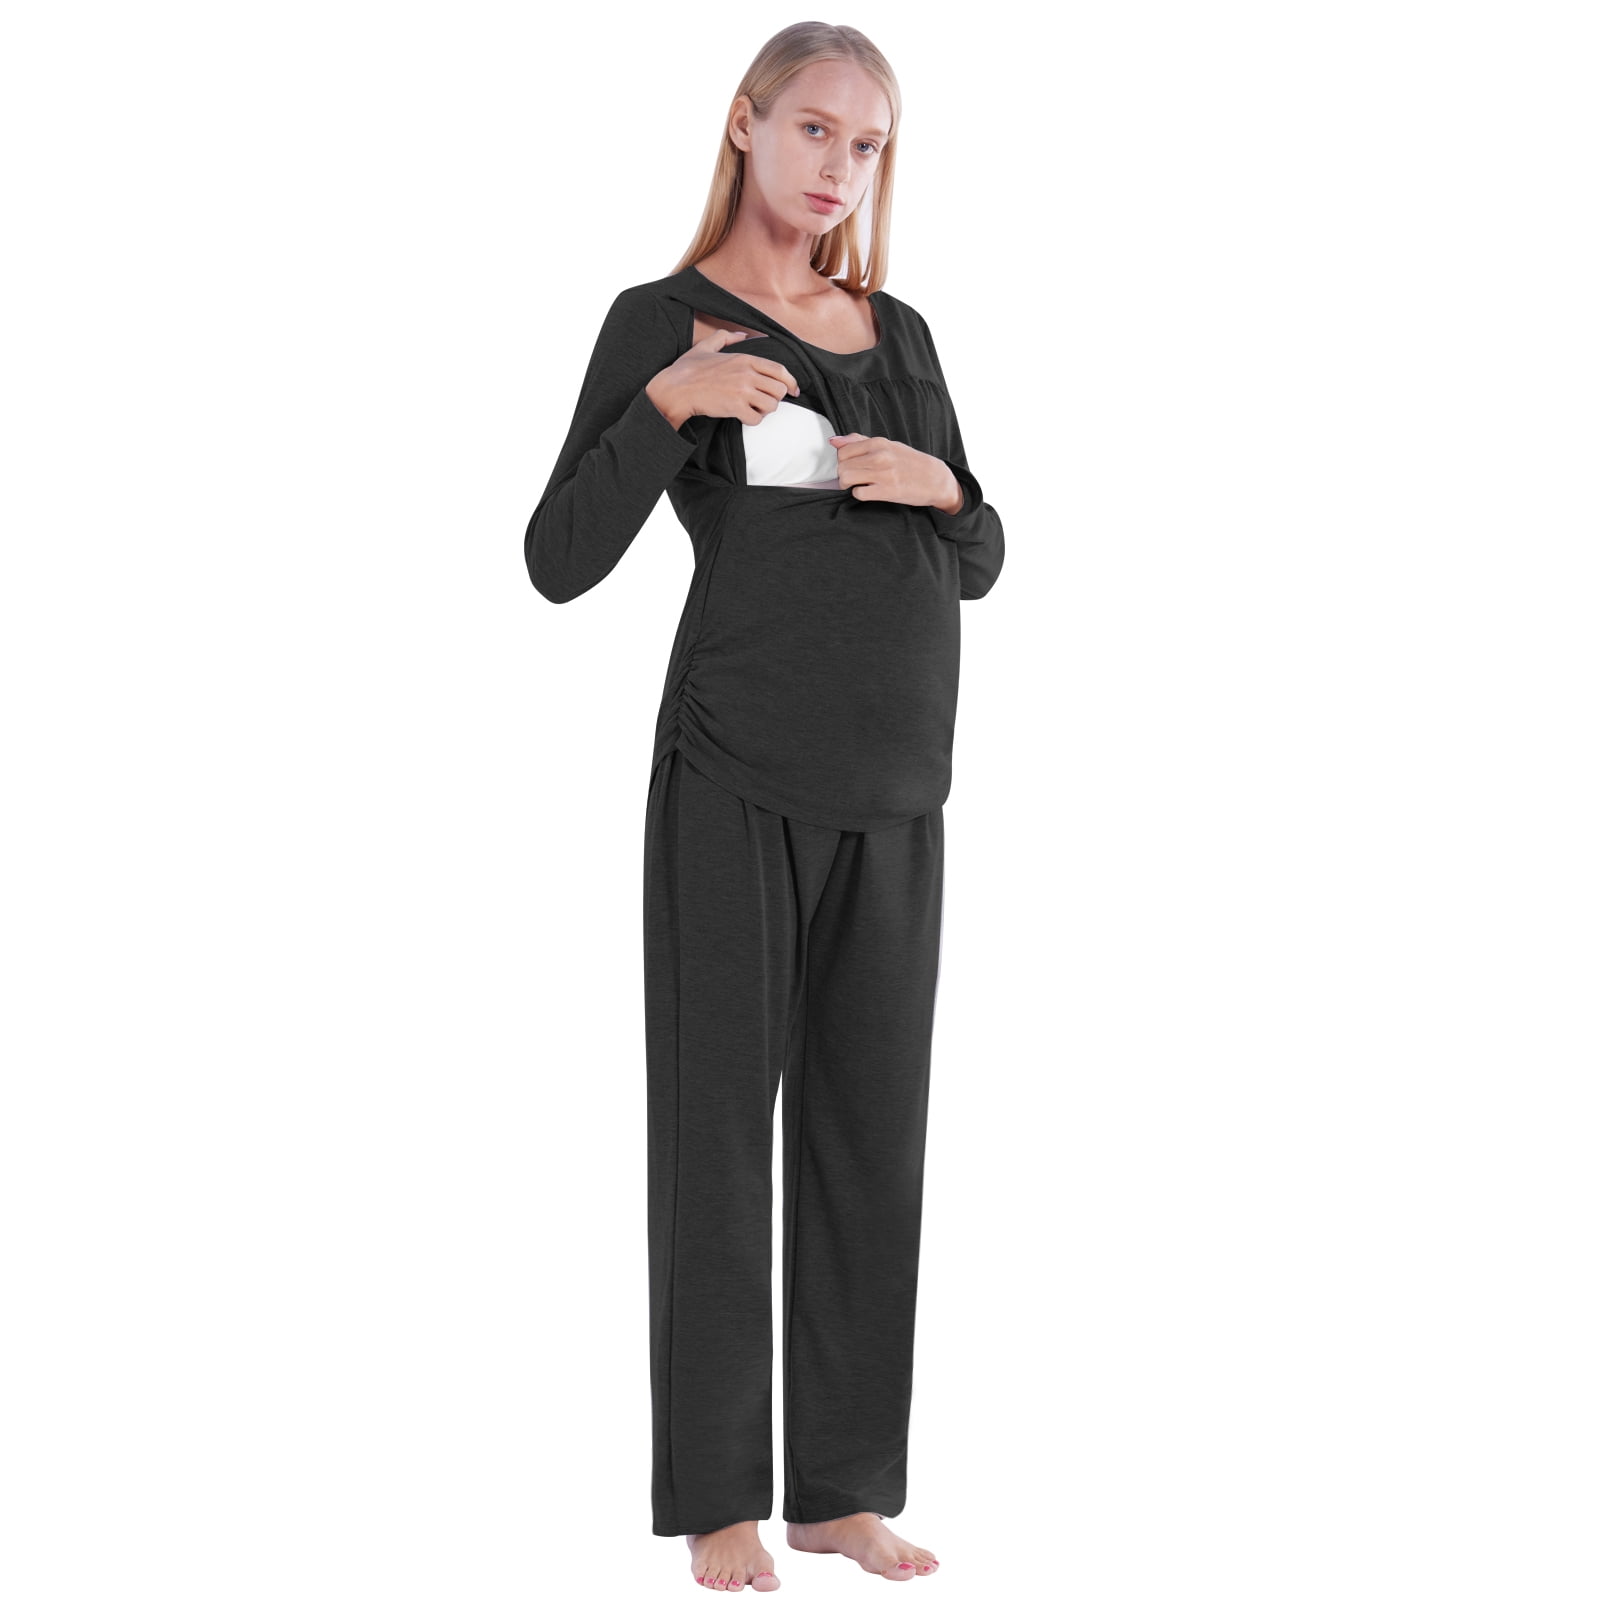 Miyanuby Maternity Nursing Pajama Sets Long Sleeve Breastfeeding Sleepwear  Set Side Open Ruched Top with Built-in Bra & Pants Pregnancy Lounge PJS